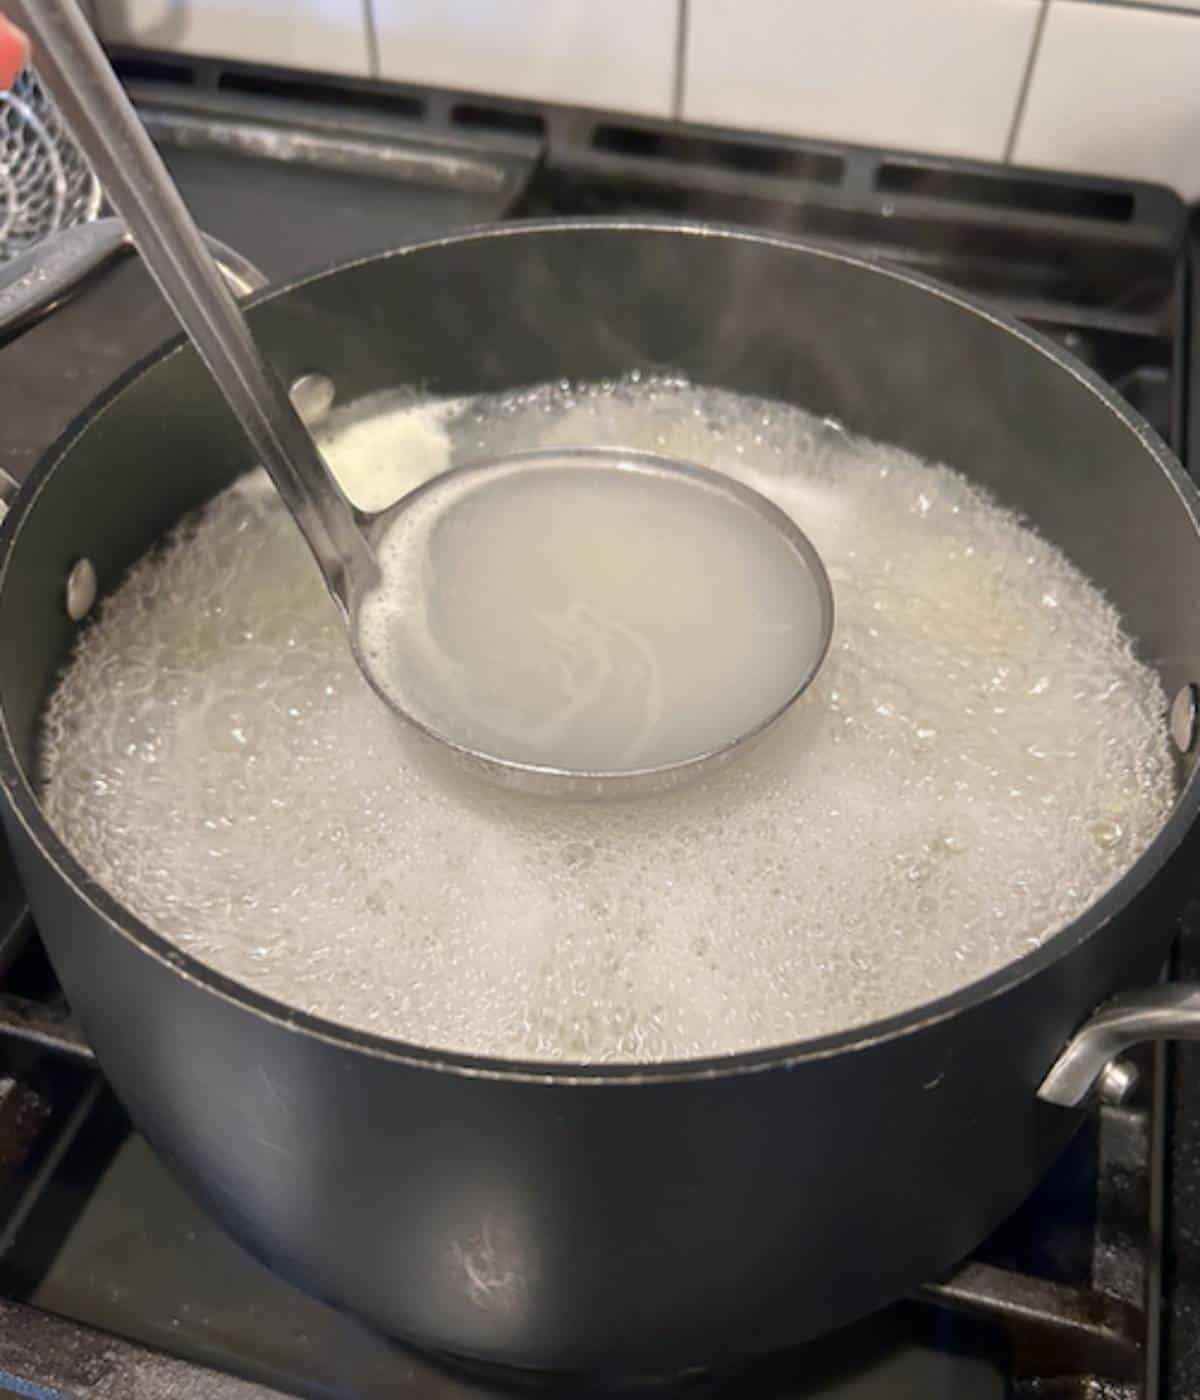 Ladle full of pasta water.